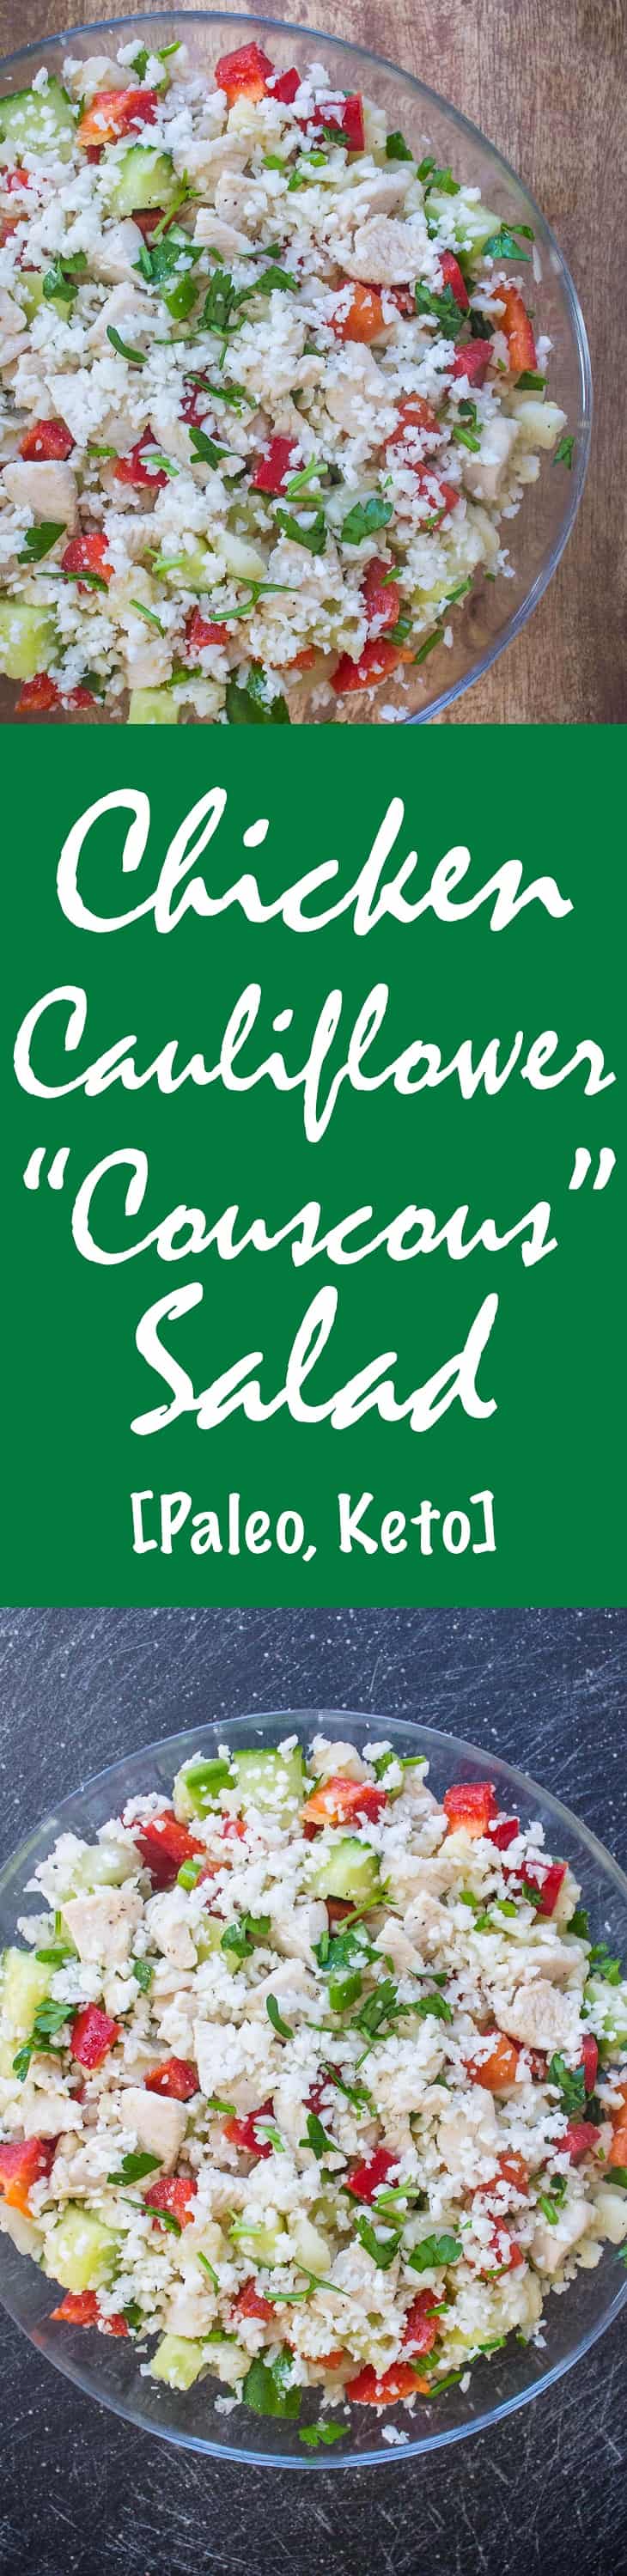 Chicken Cauliflower "Couscous" Salad Recipe [Paleo, Keto] #paleo #keto - https://paleoflourish.com/chicken-cauliflower-couscous-salad-recipe